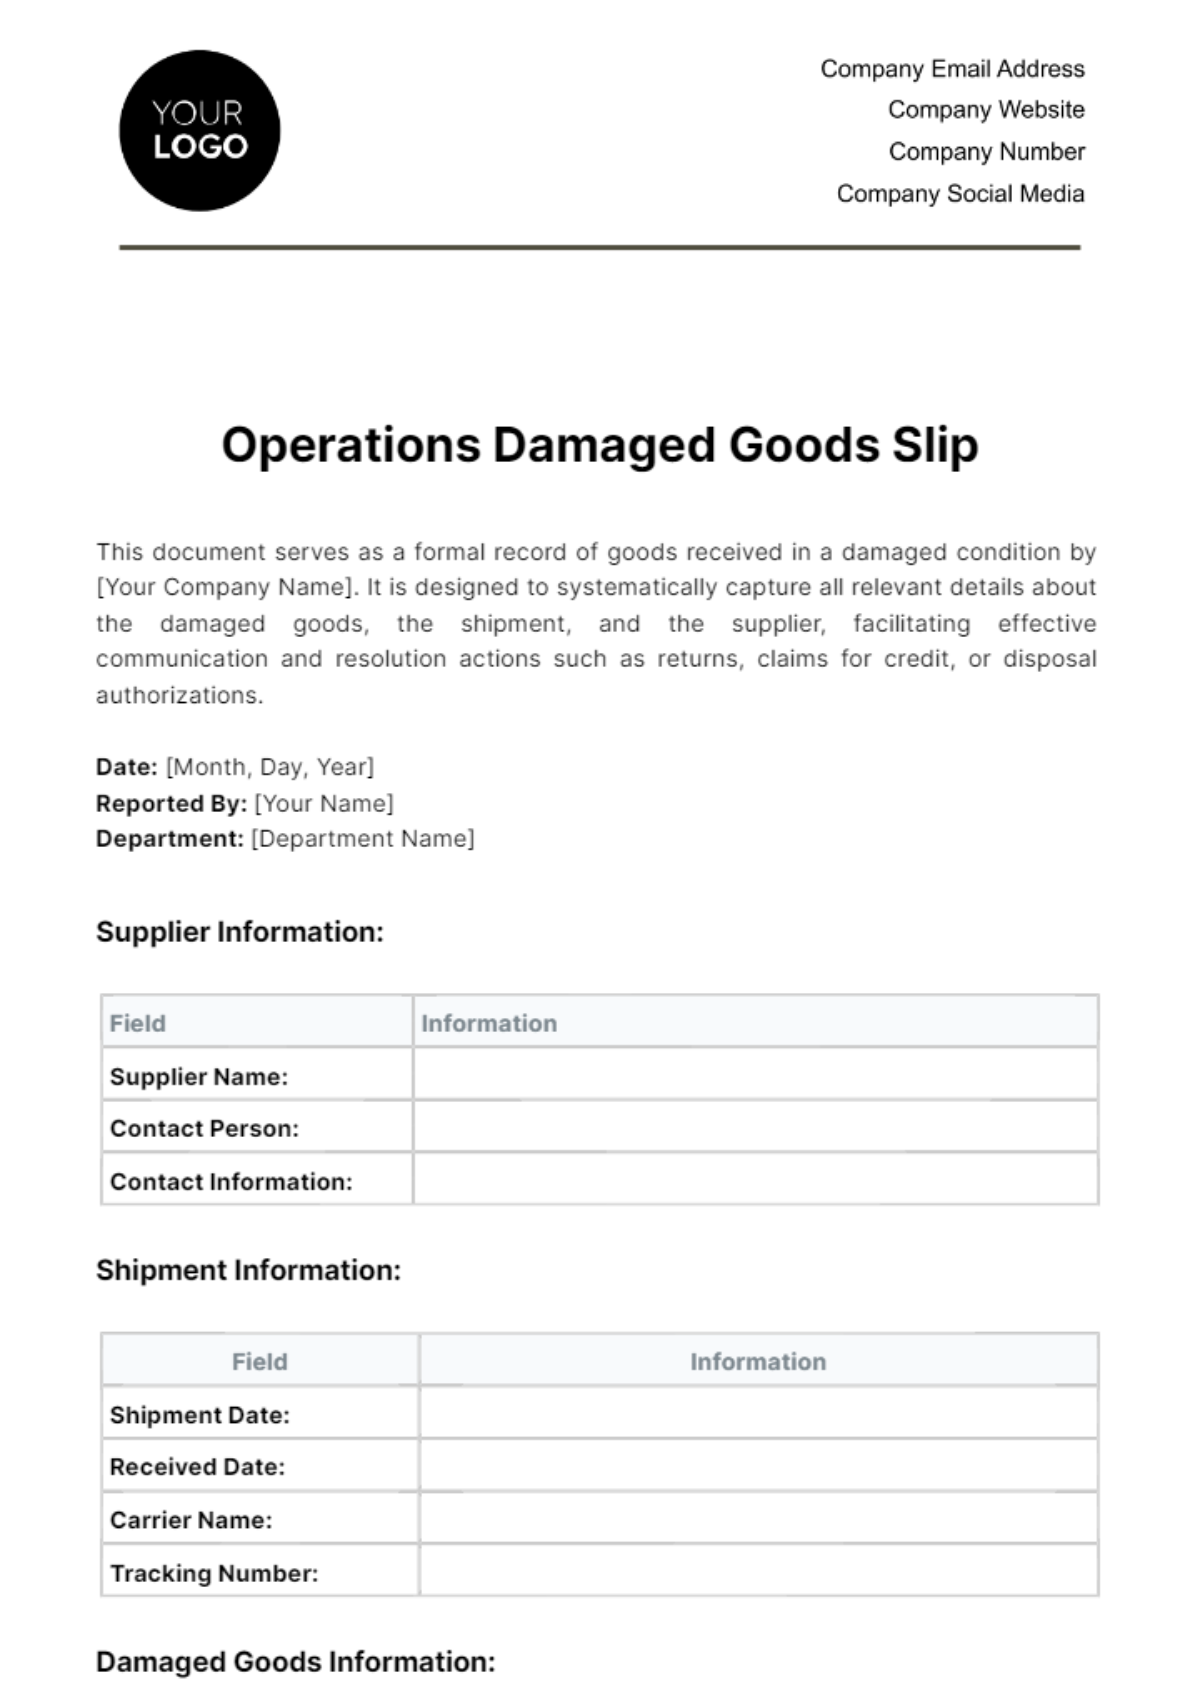 Operations Damaged Goods Slip Template